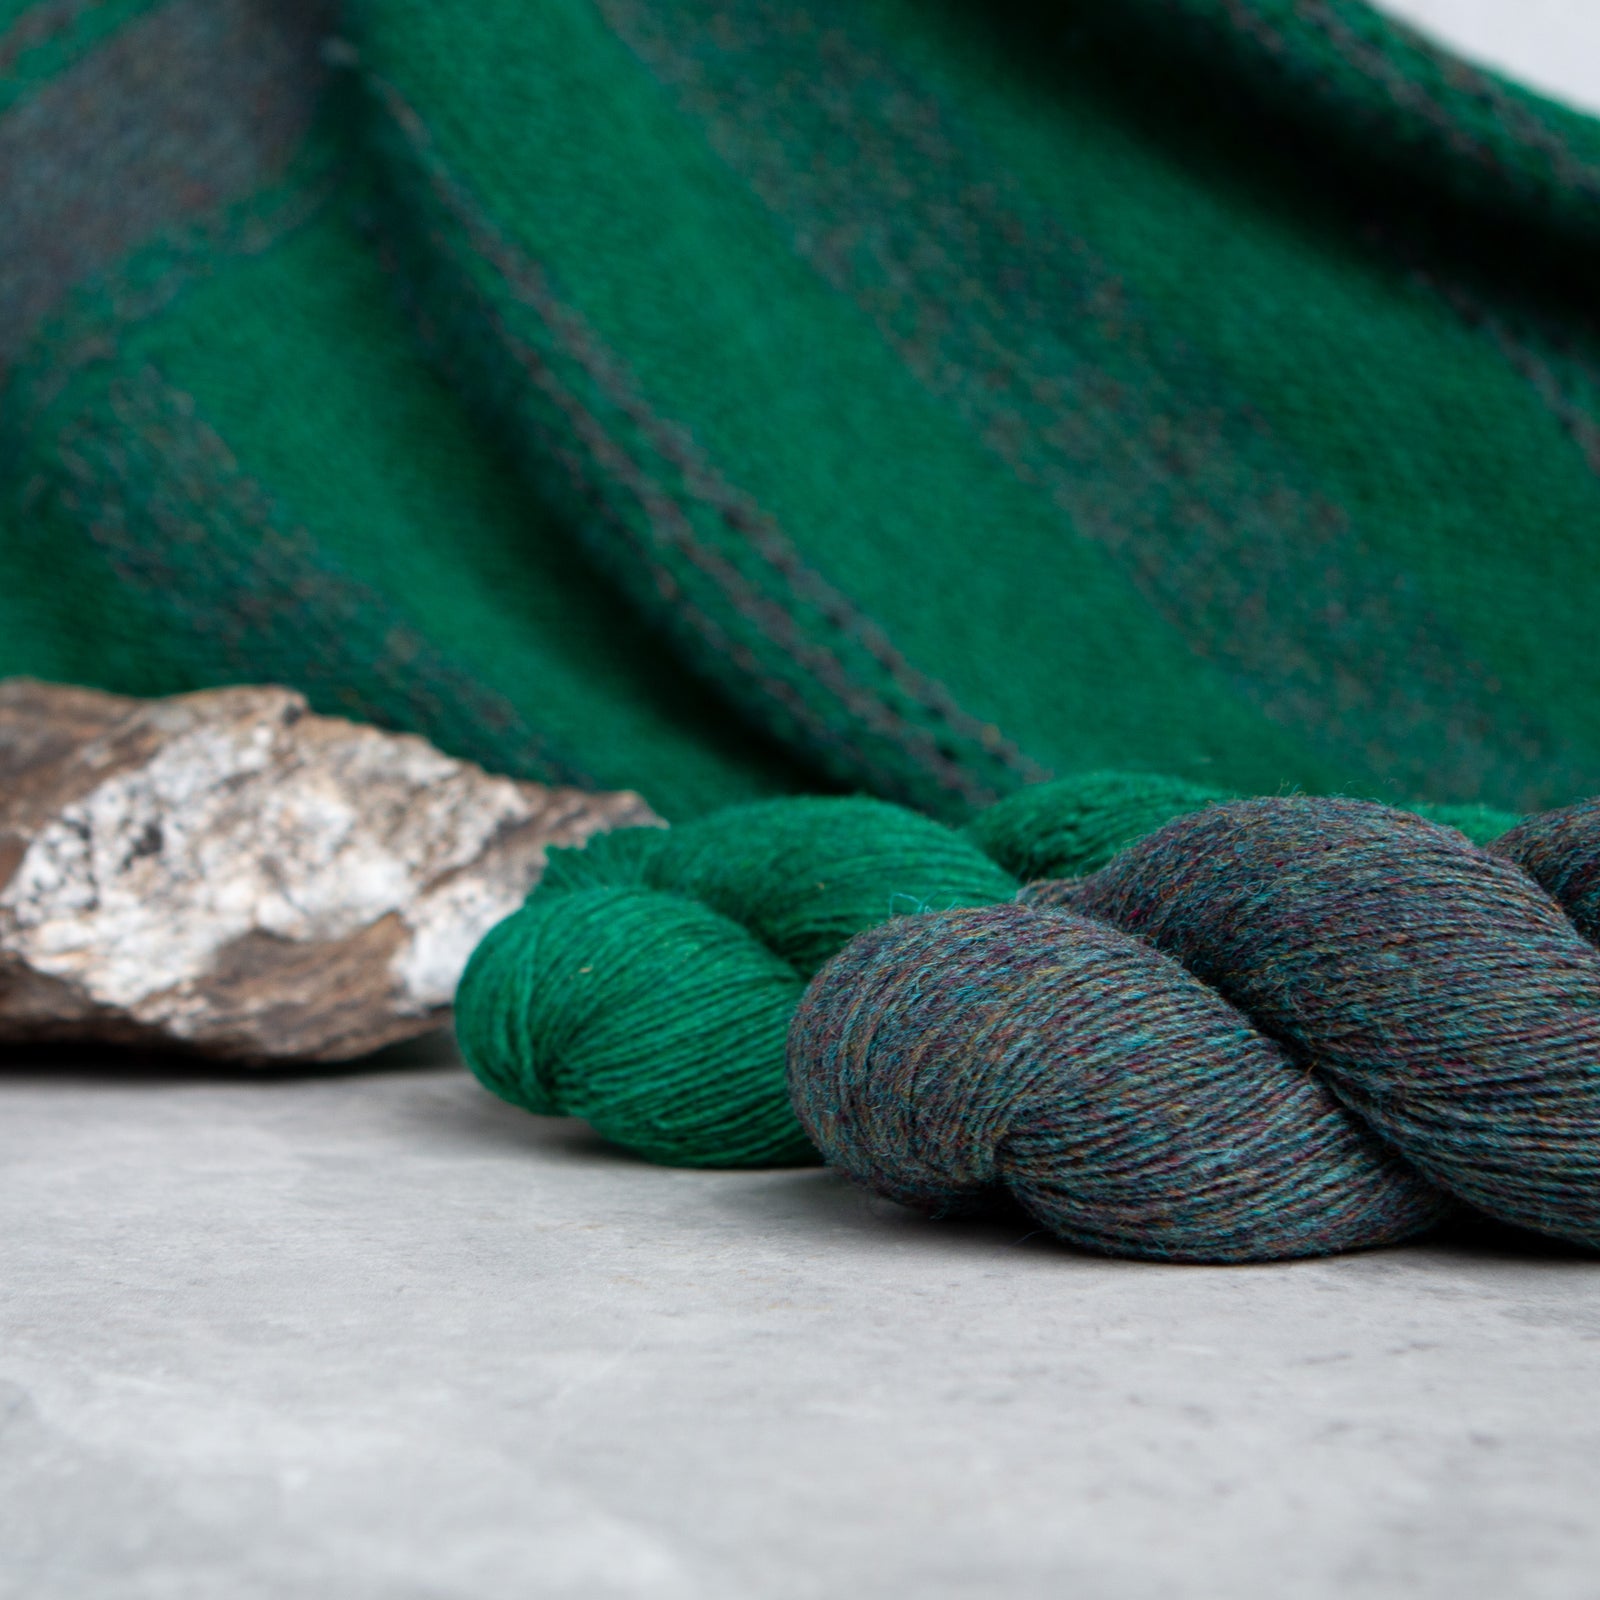 Iascaire Sweater Yarn Kit, Hand Knitting